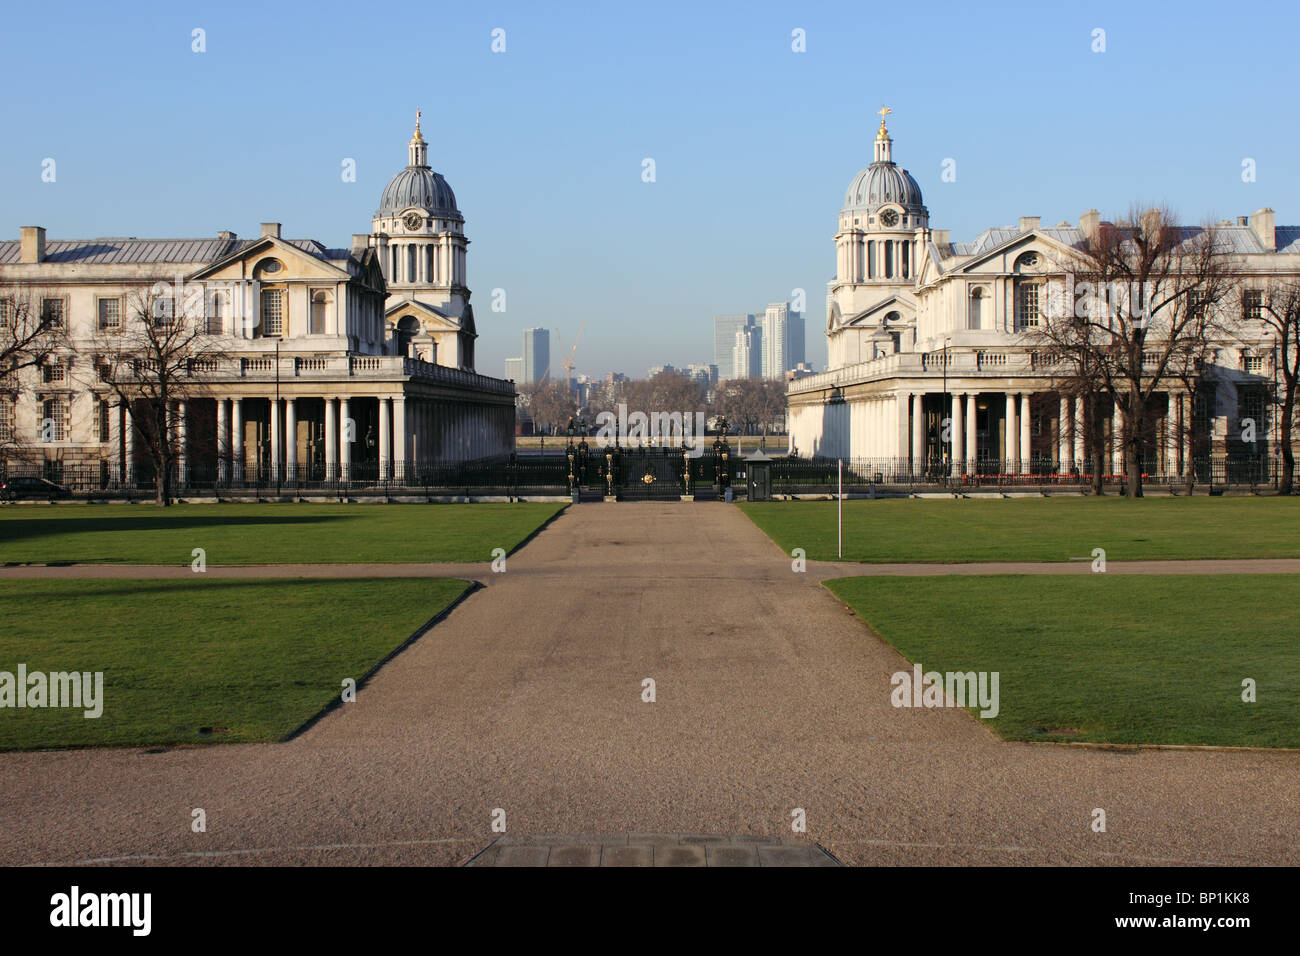 Vista simmetrici del Royal Naval College dal Queens House, Greenwich, London, England, Regno Unito, con Canary Wharf in background Foto Stock